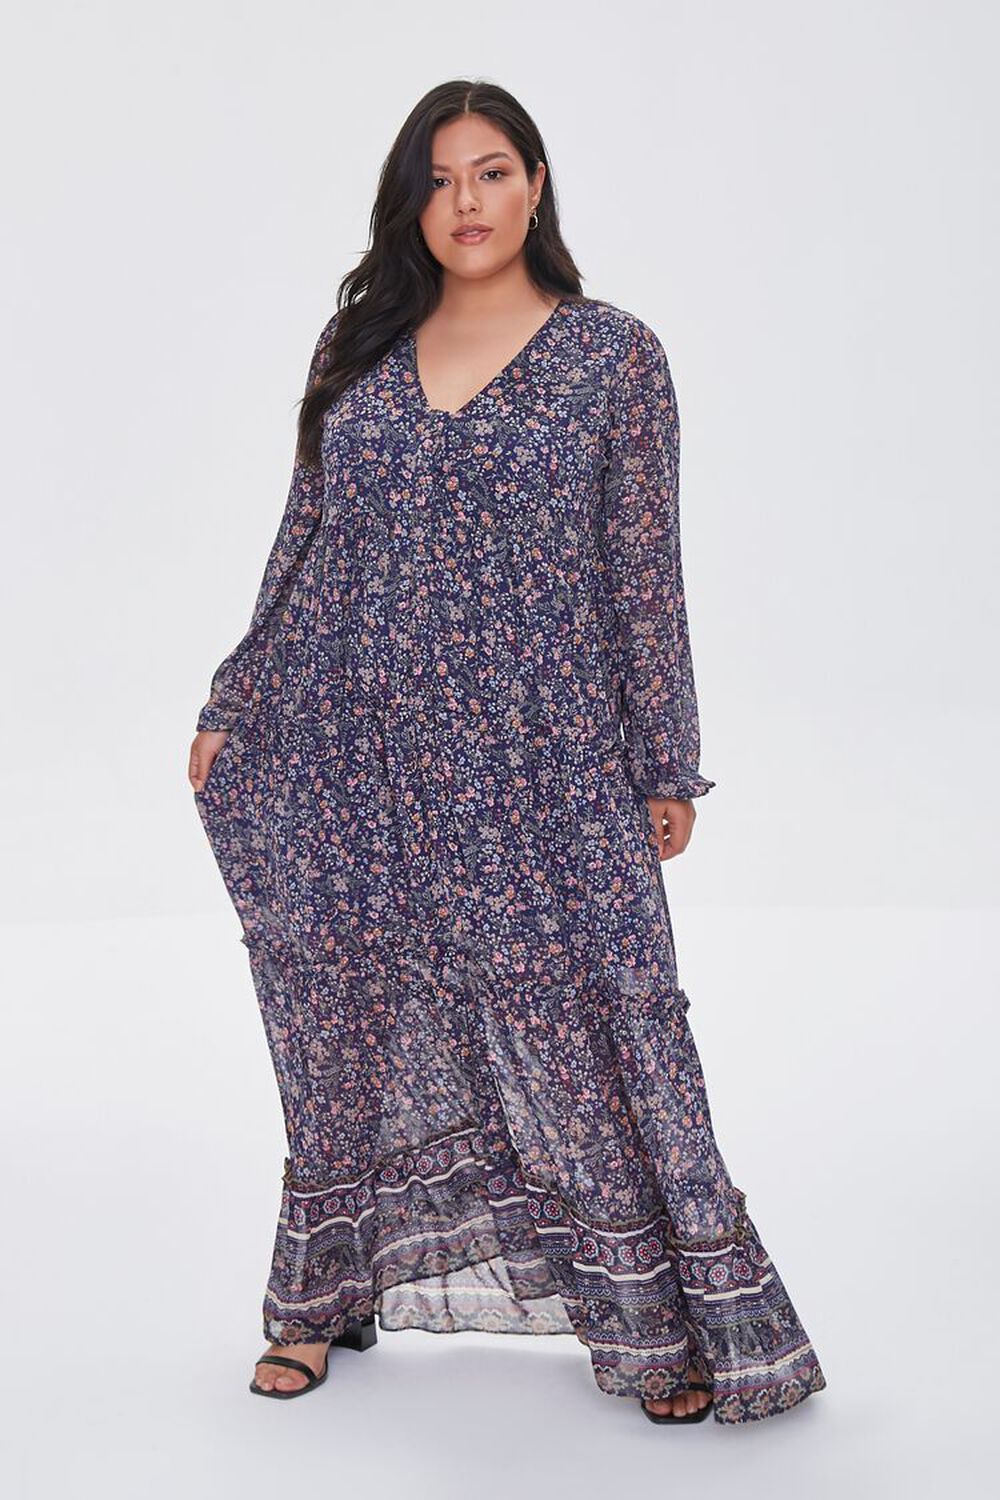 NAVY/MULTI Plus Size Chiffon Floral Maxi Dress, image 1